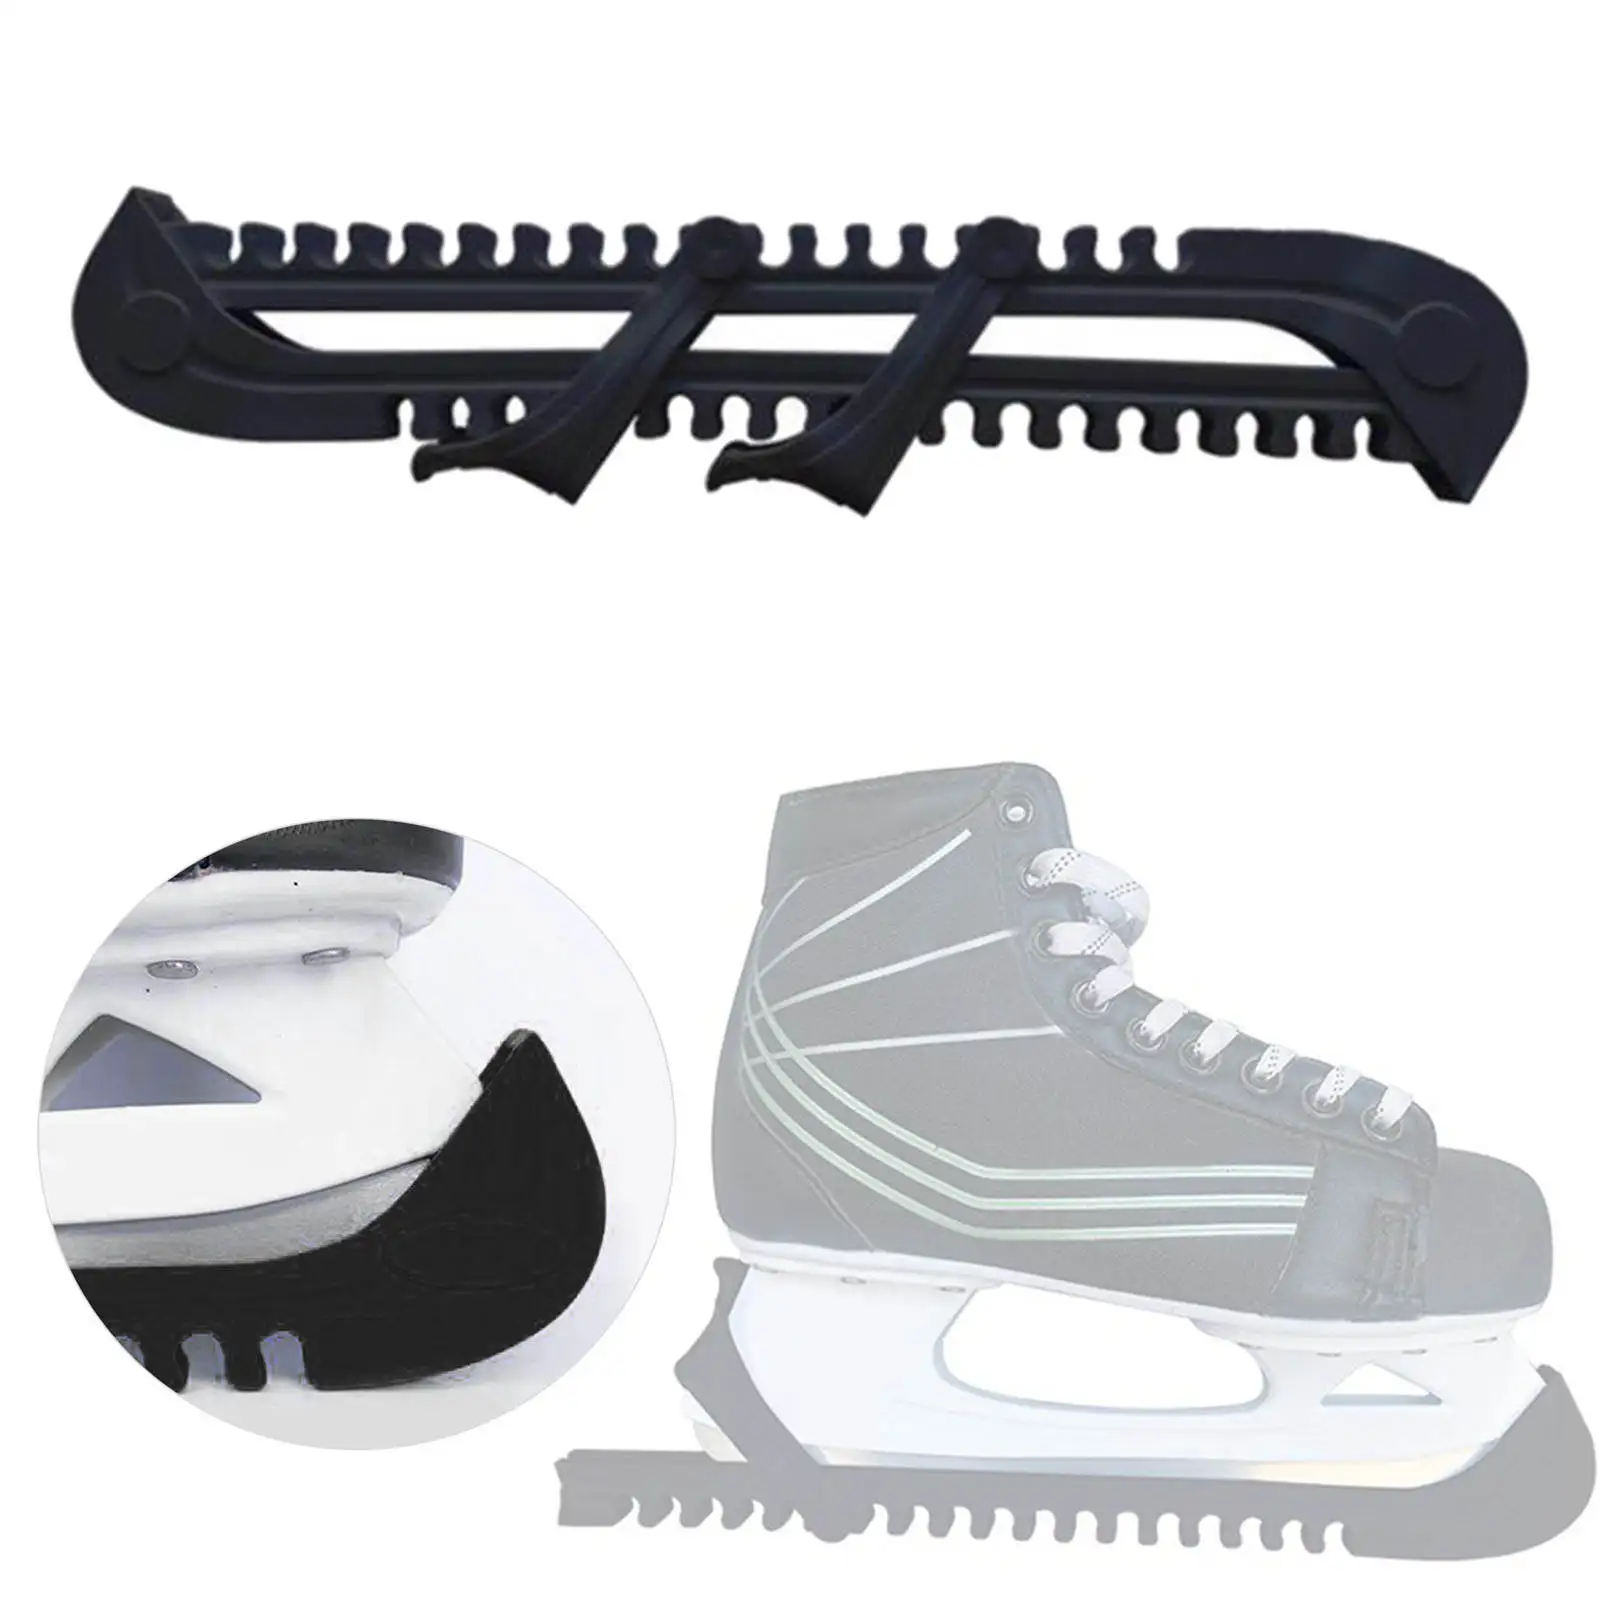 Skate Boots Equipment Carrier Bag &Blade Guard for Ice Roller Hockey Skating 